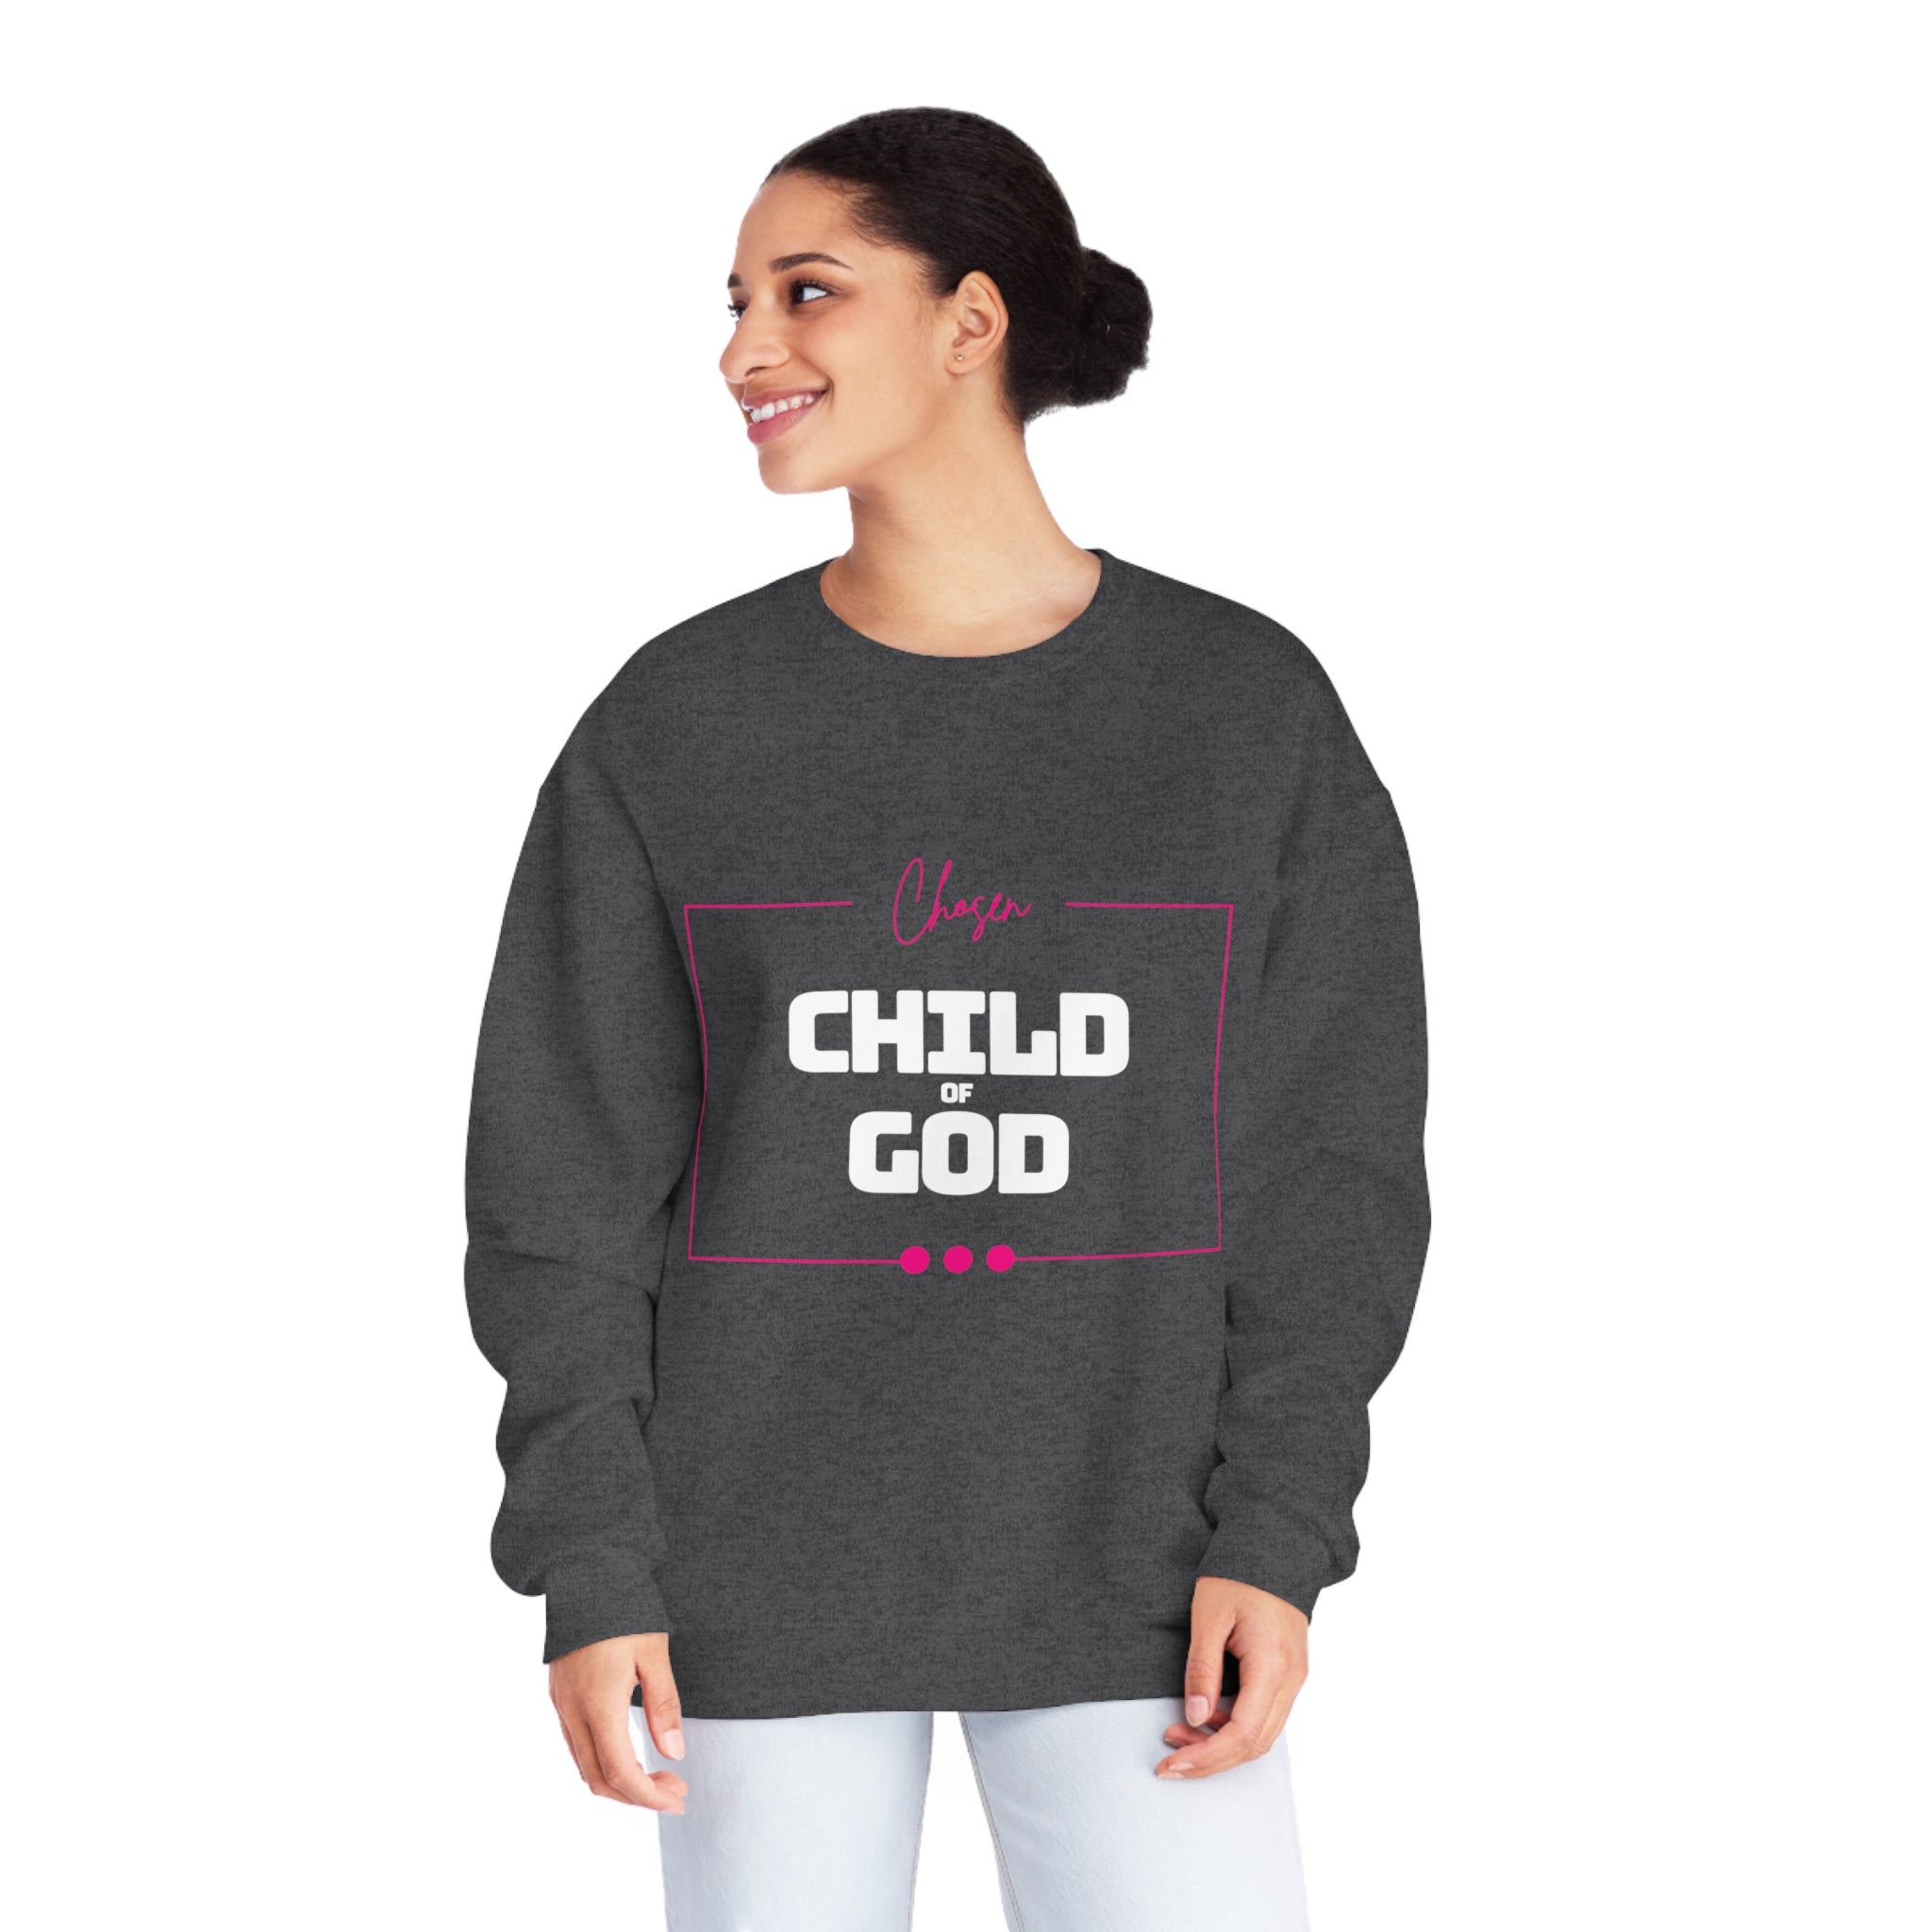 1 Peter 2:9 Crewneck Sweatshirt, Chosen Child of God